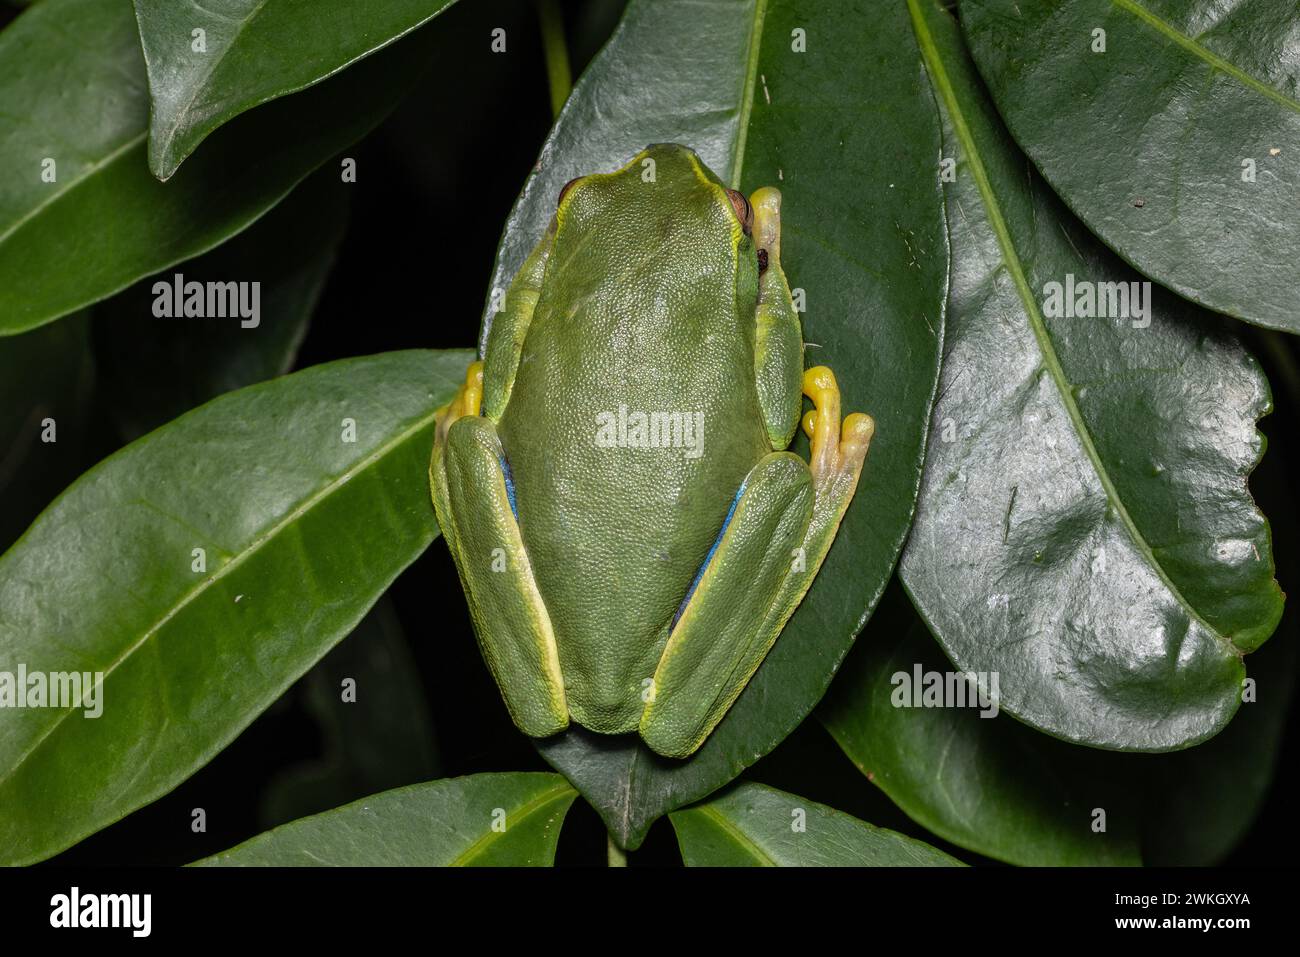 Australian Dainty Tree Frog resting on green leaf Stock Photo